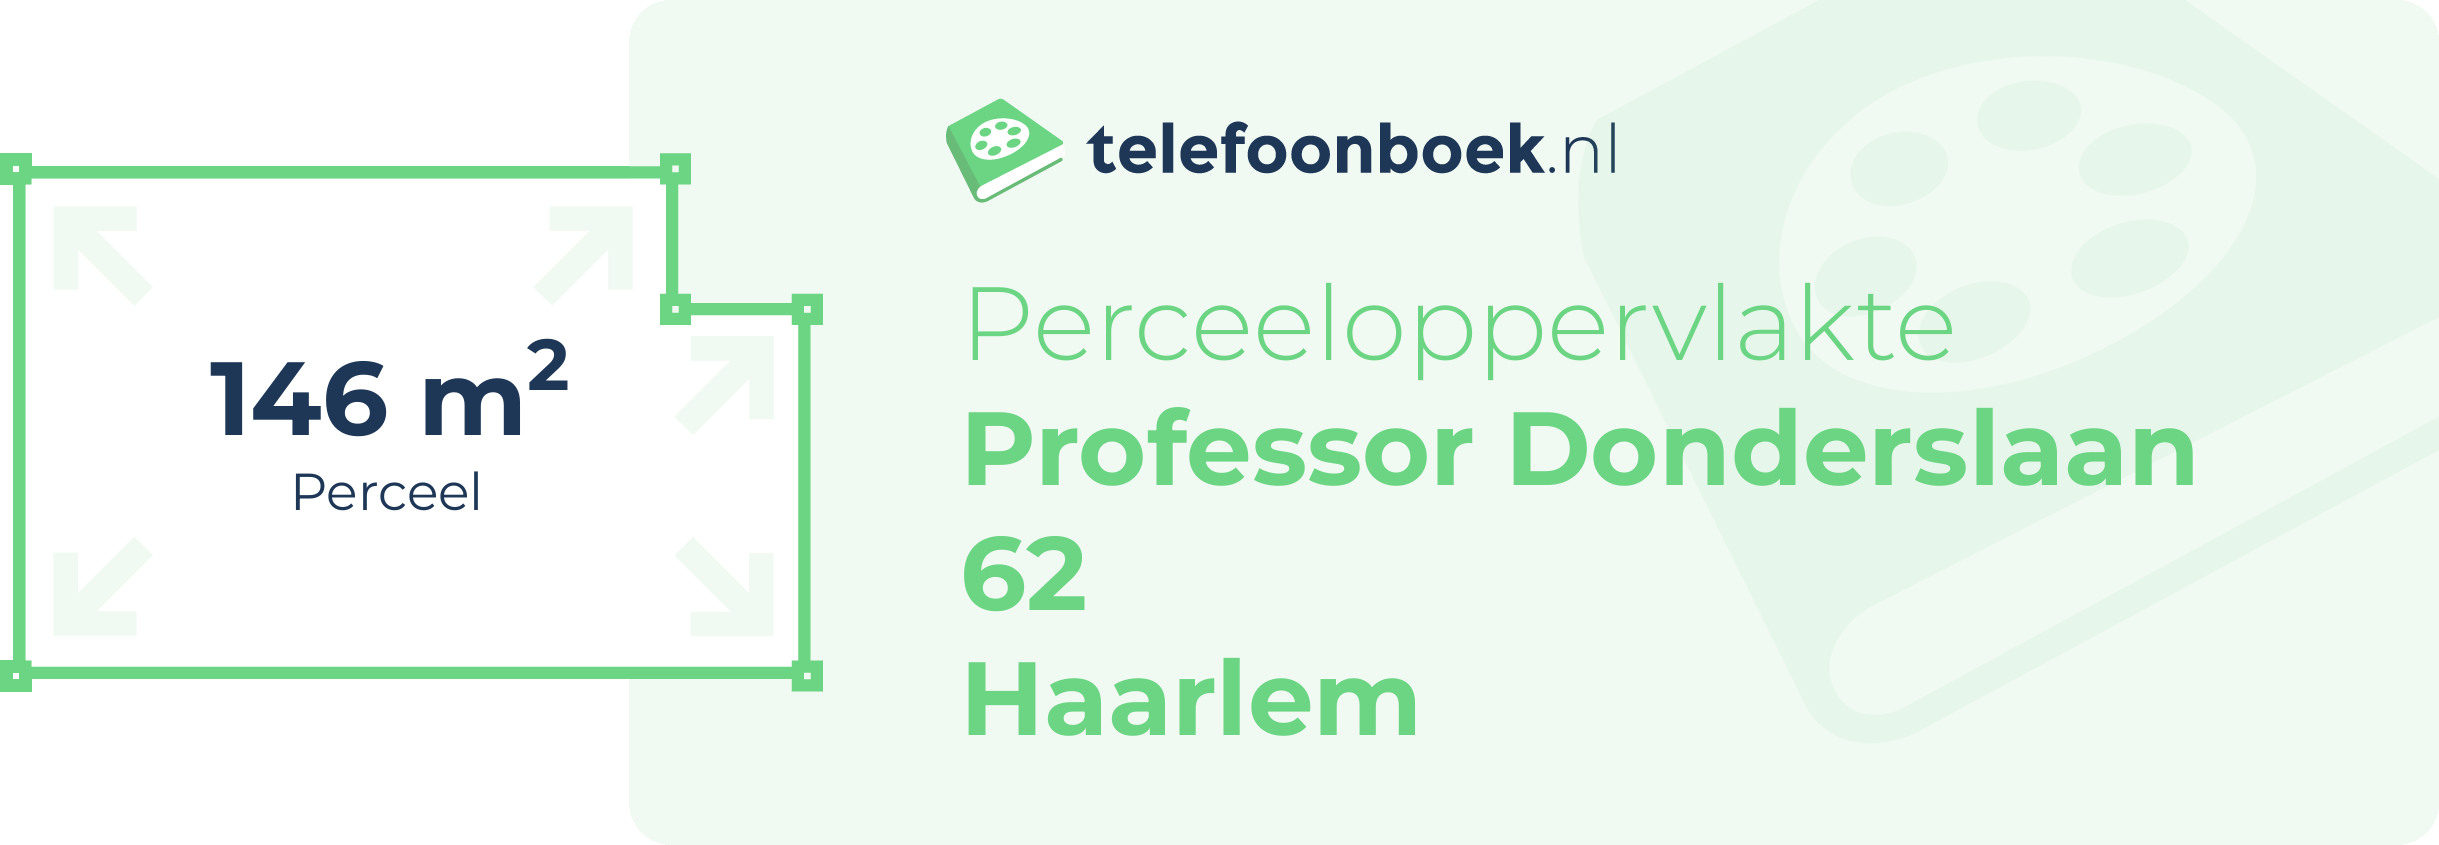 Perceeloppervlakte Professor Donderslaan 62 Haarlem